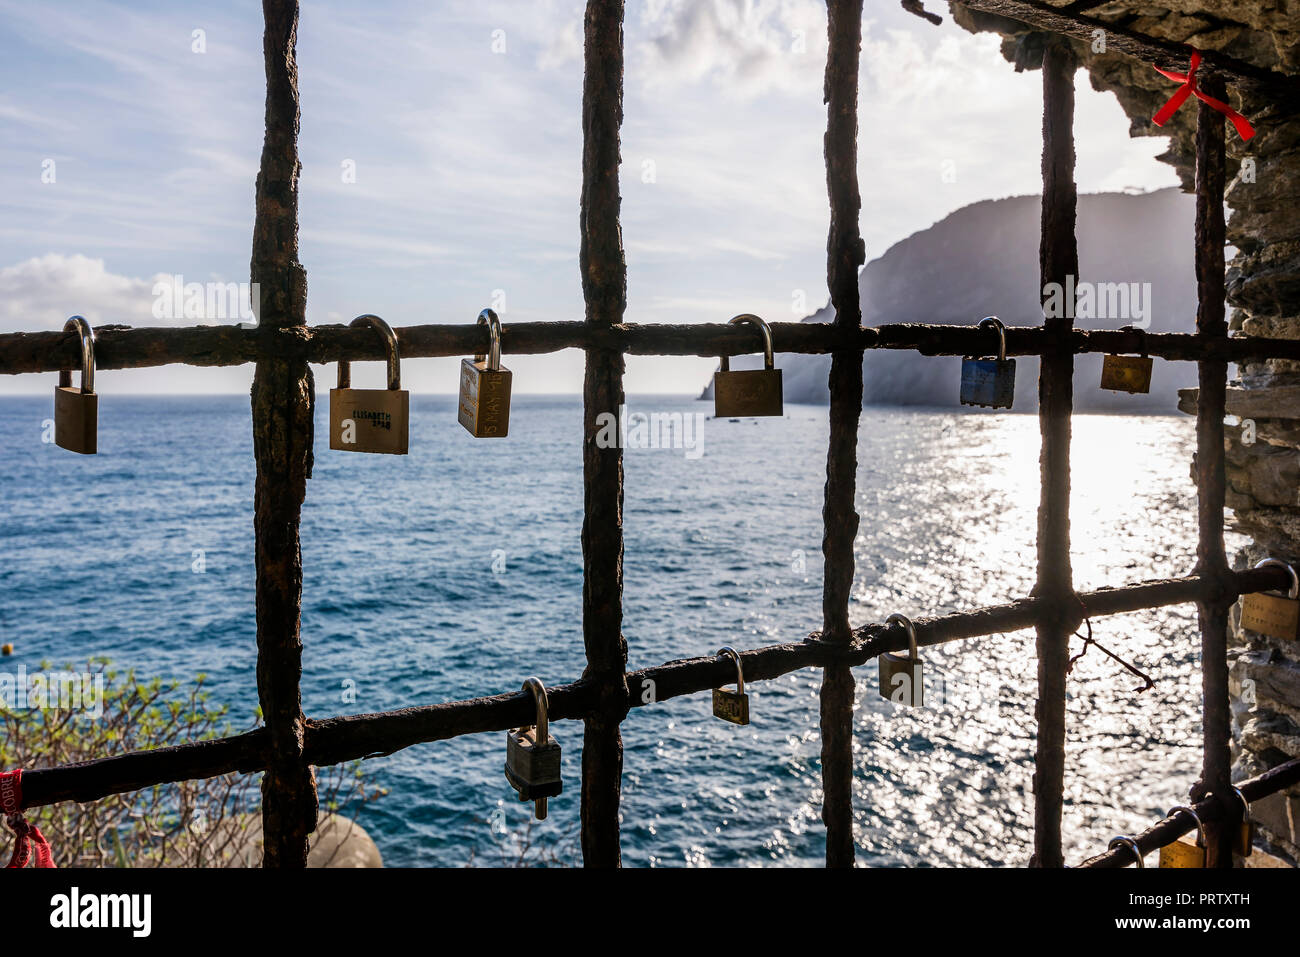 Padlocks hanging from a window on the sea, with promises of eternal love, Monterosso al mare, La Spezia, Liguria, Italy Stock Photo